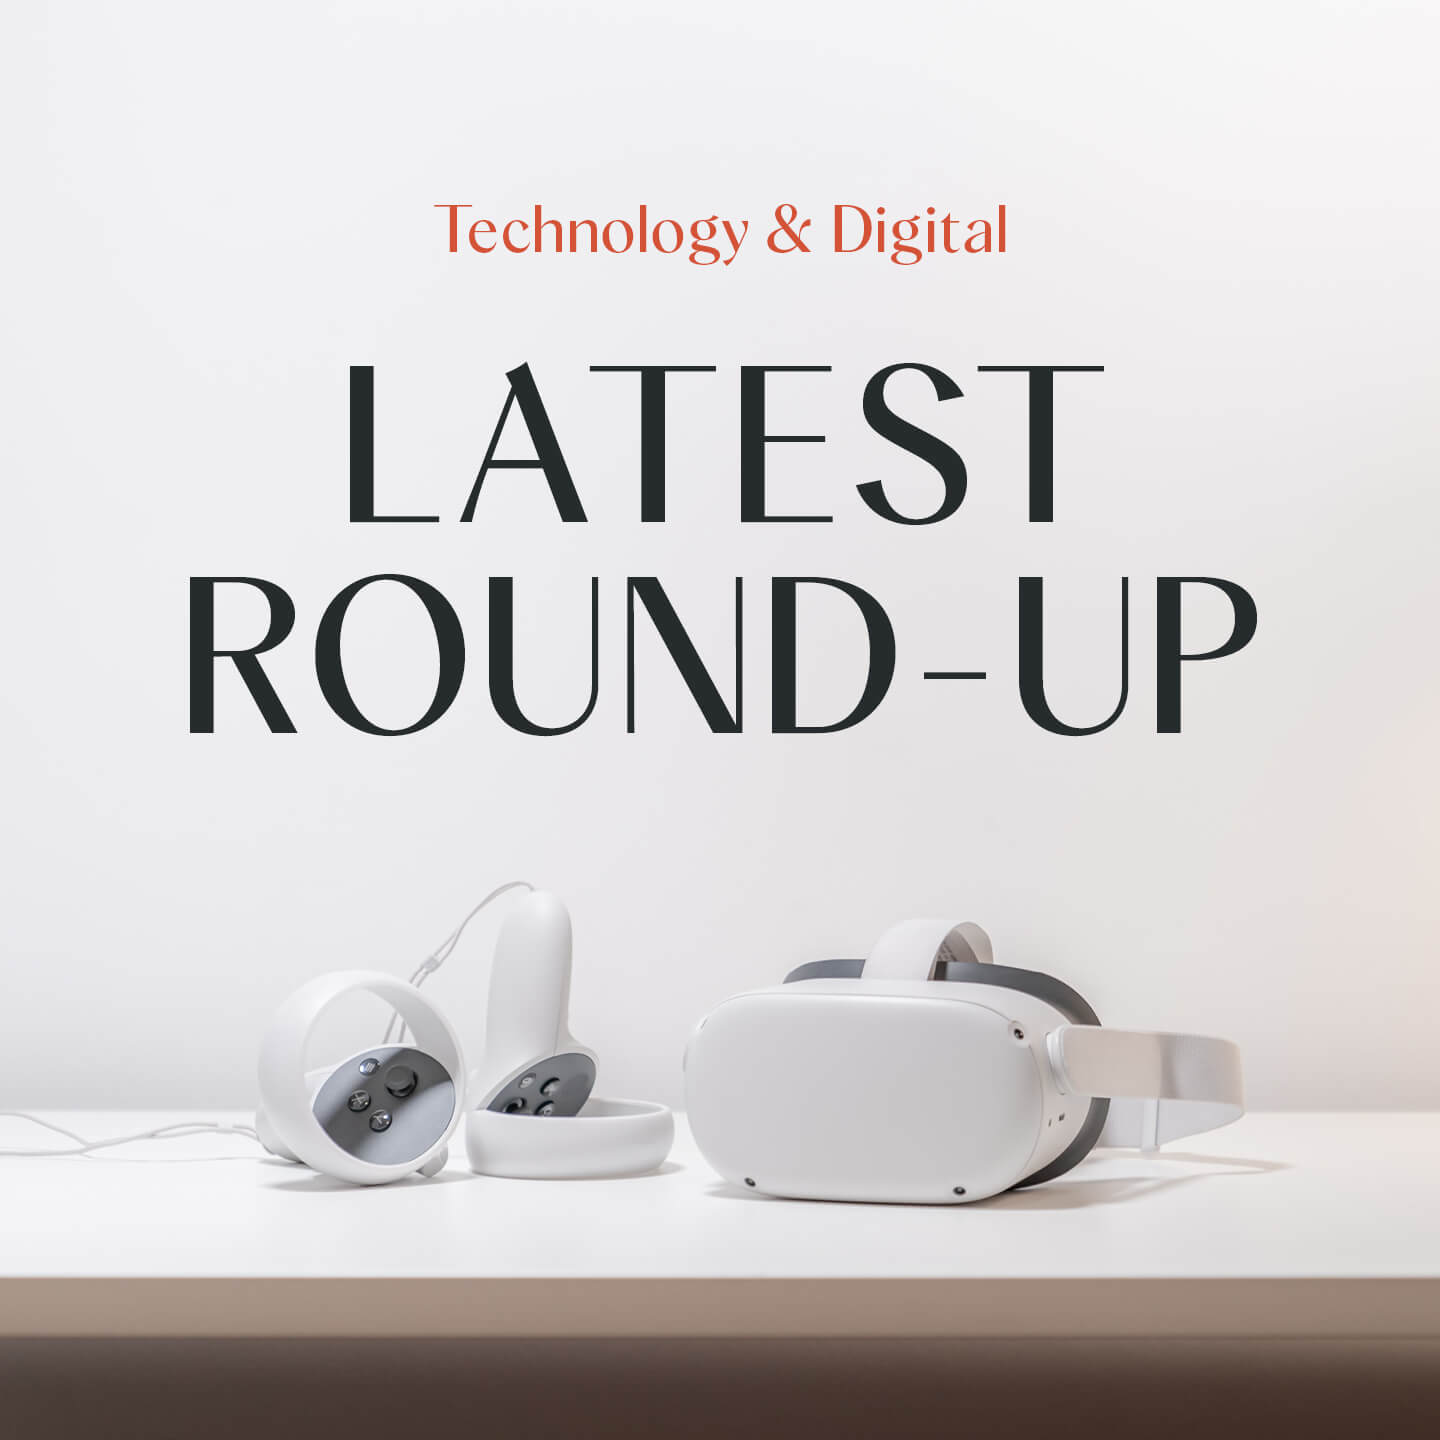 Tech-Digital-Round-Up-1